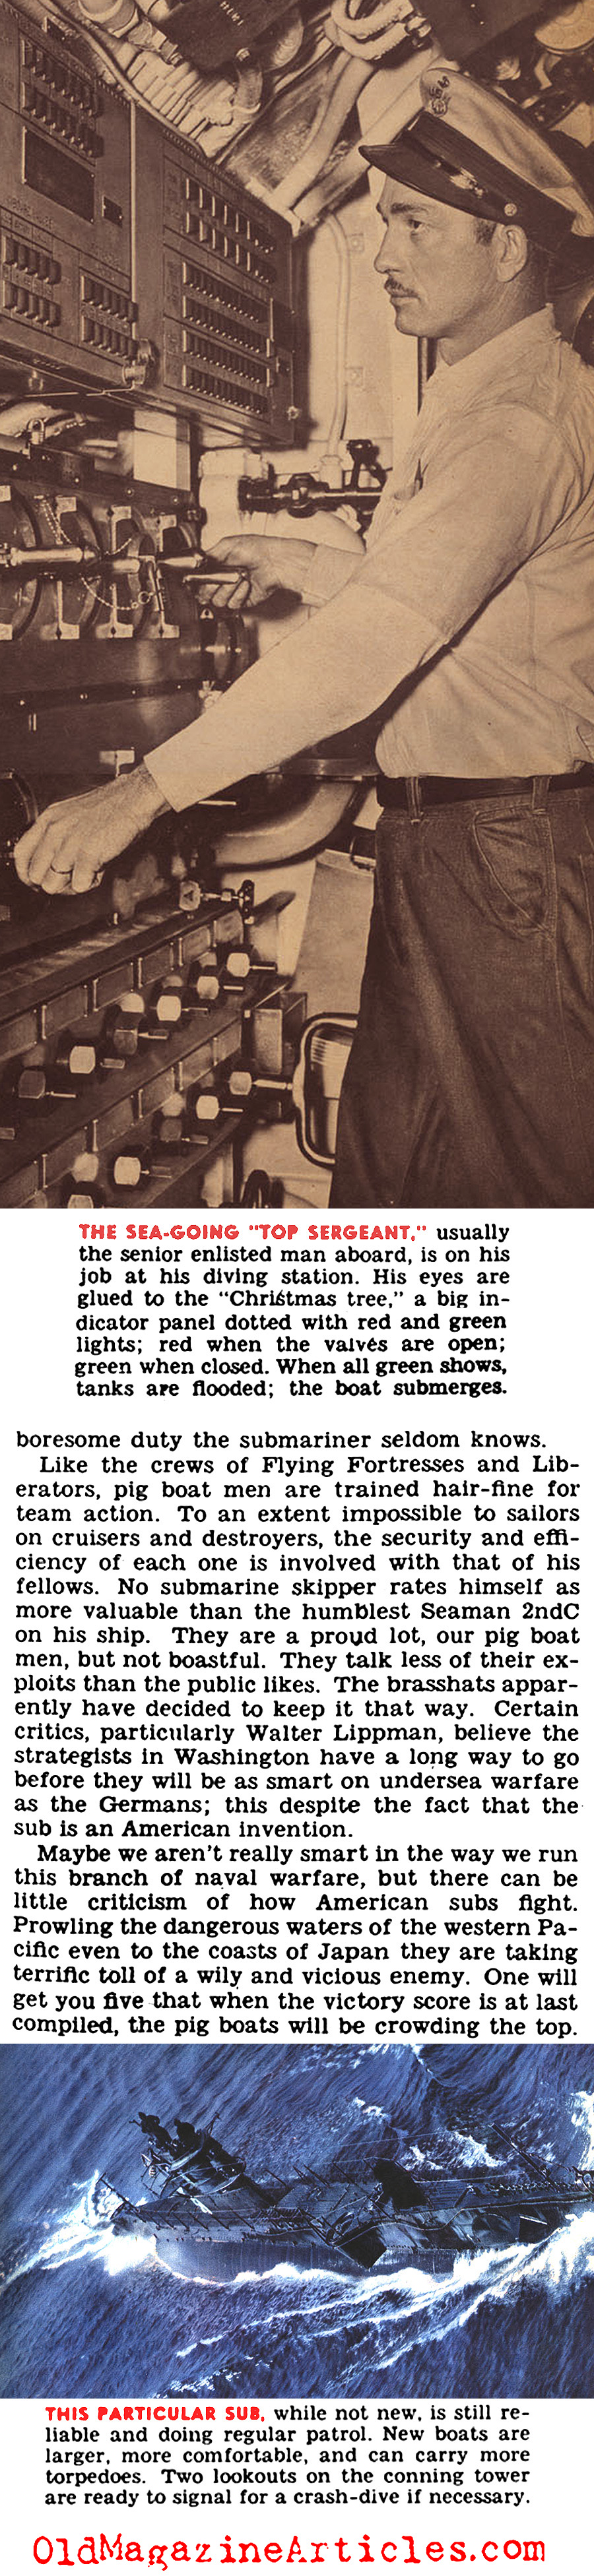 Life on a U.S. Navy Sub (Click Magazine, 1943)